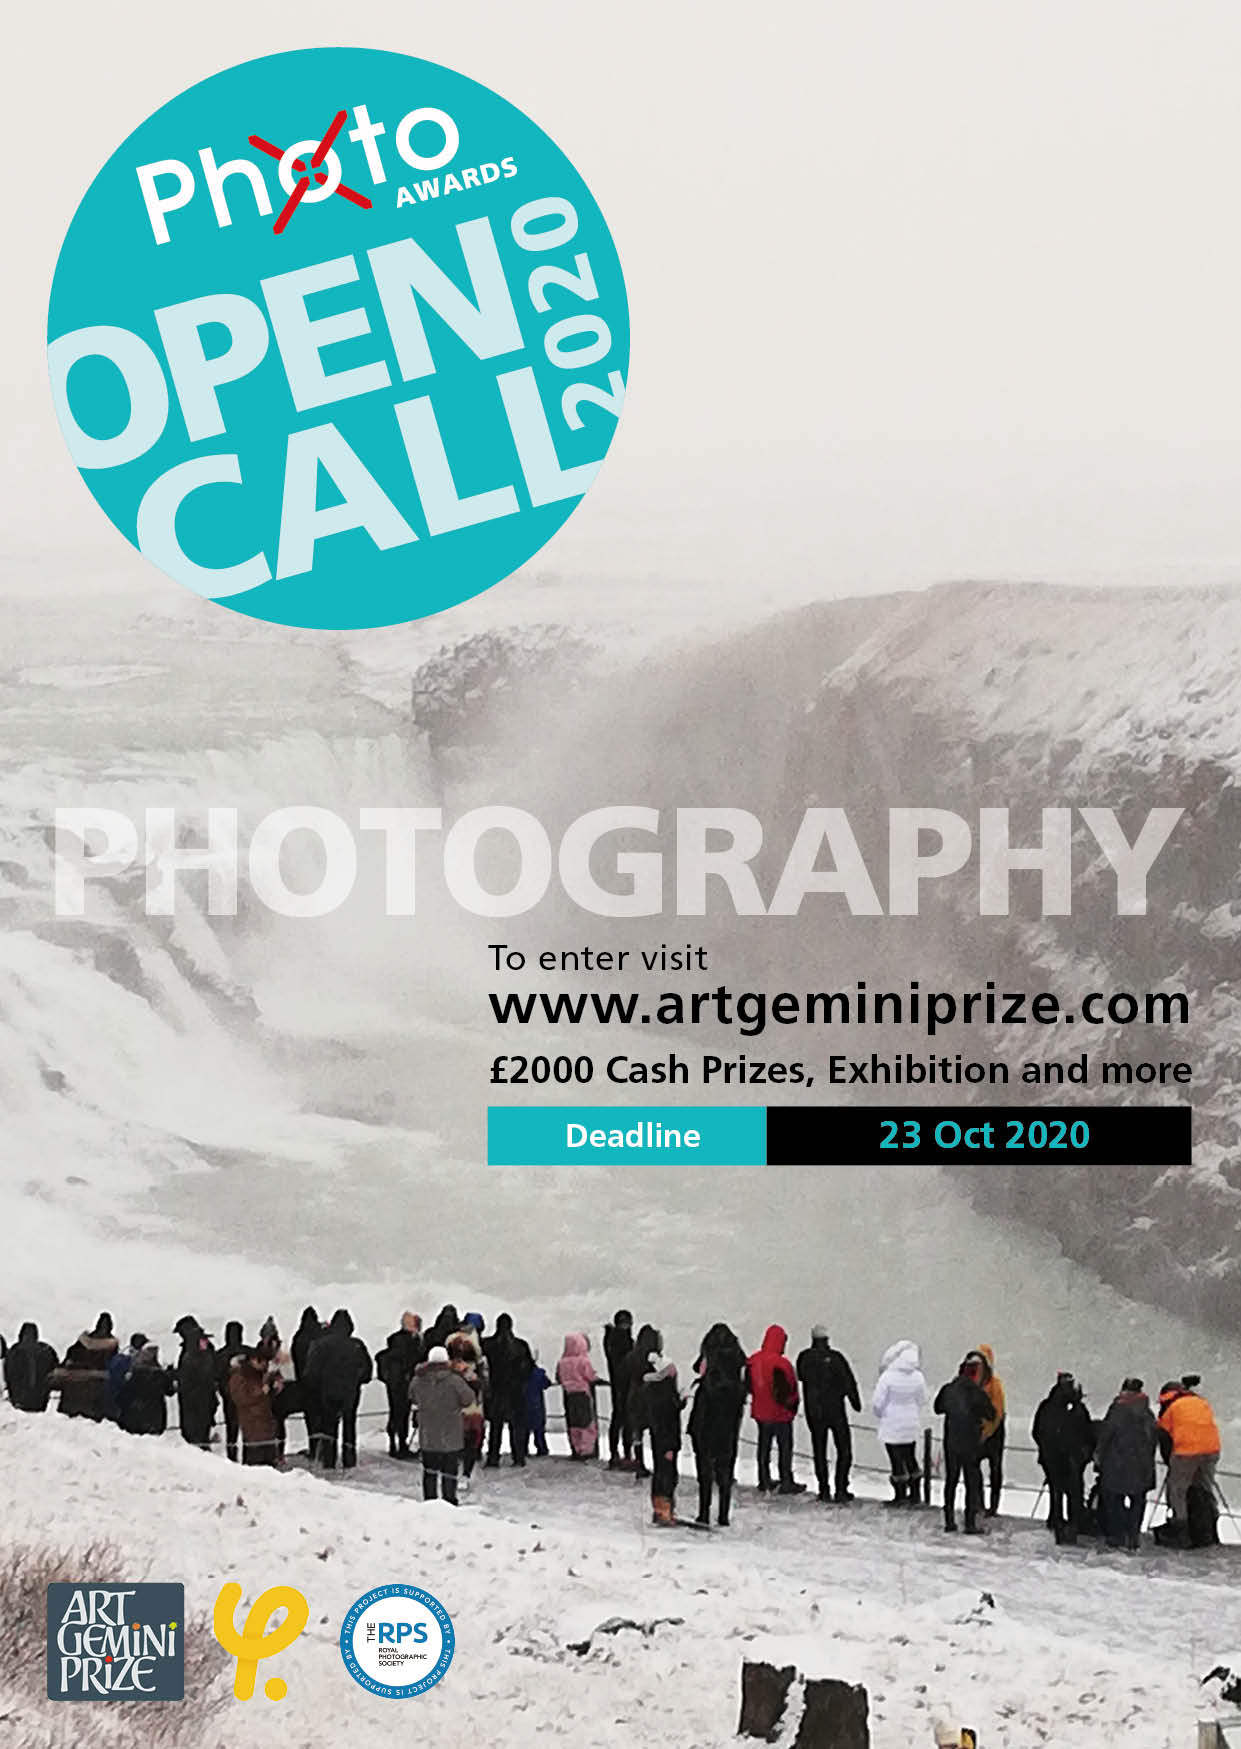 PhotoX Awards 2020 presented by ArtGemini Prize